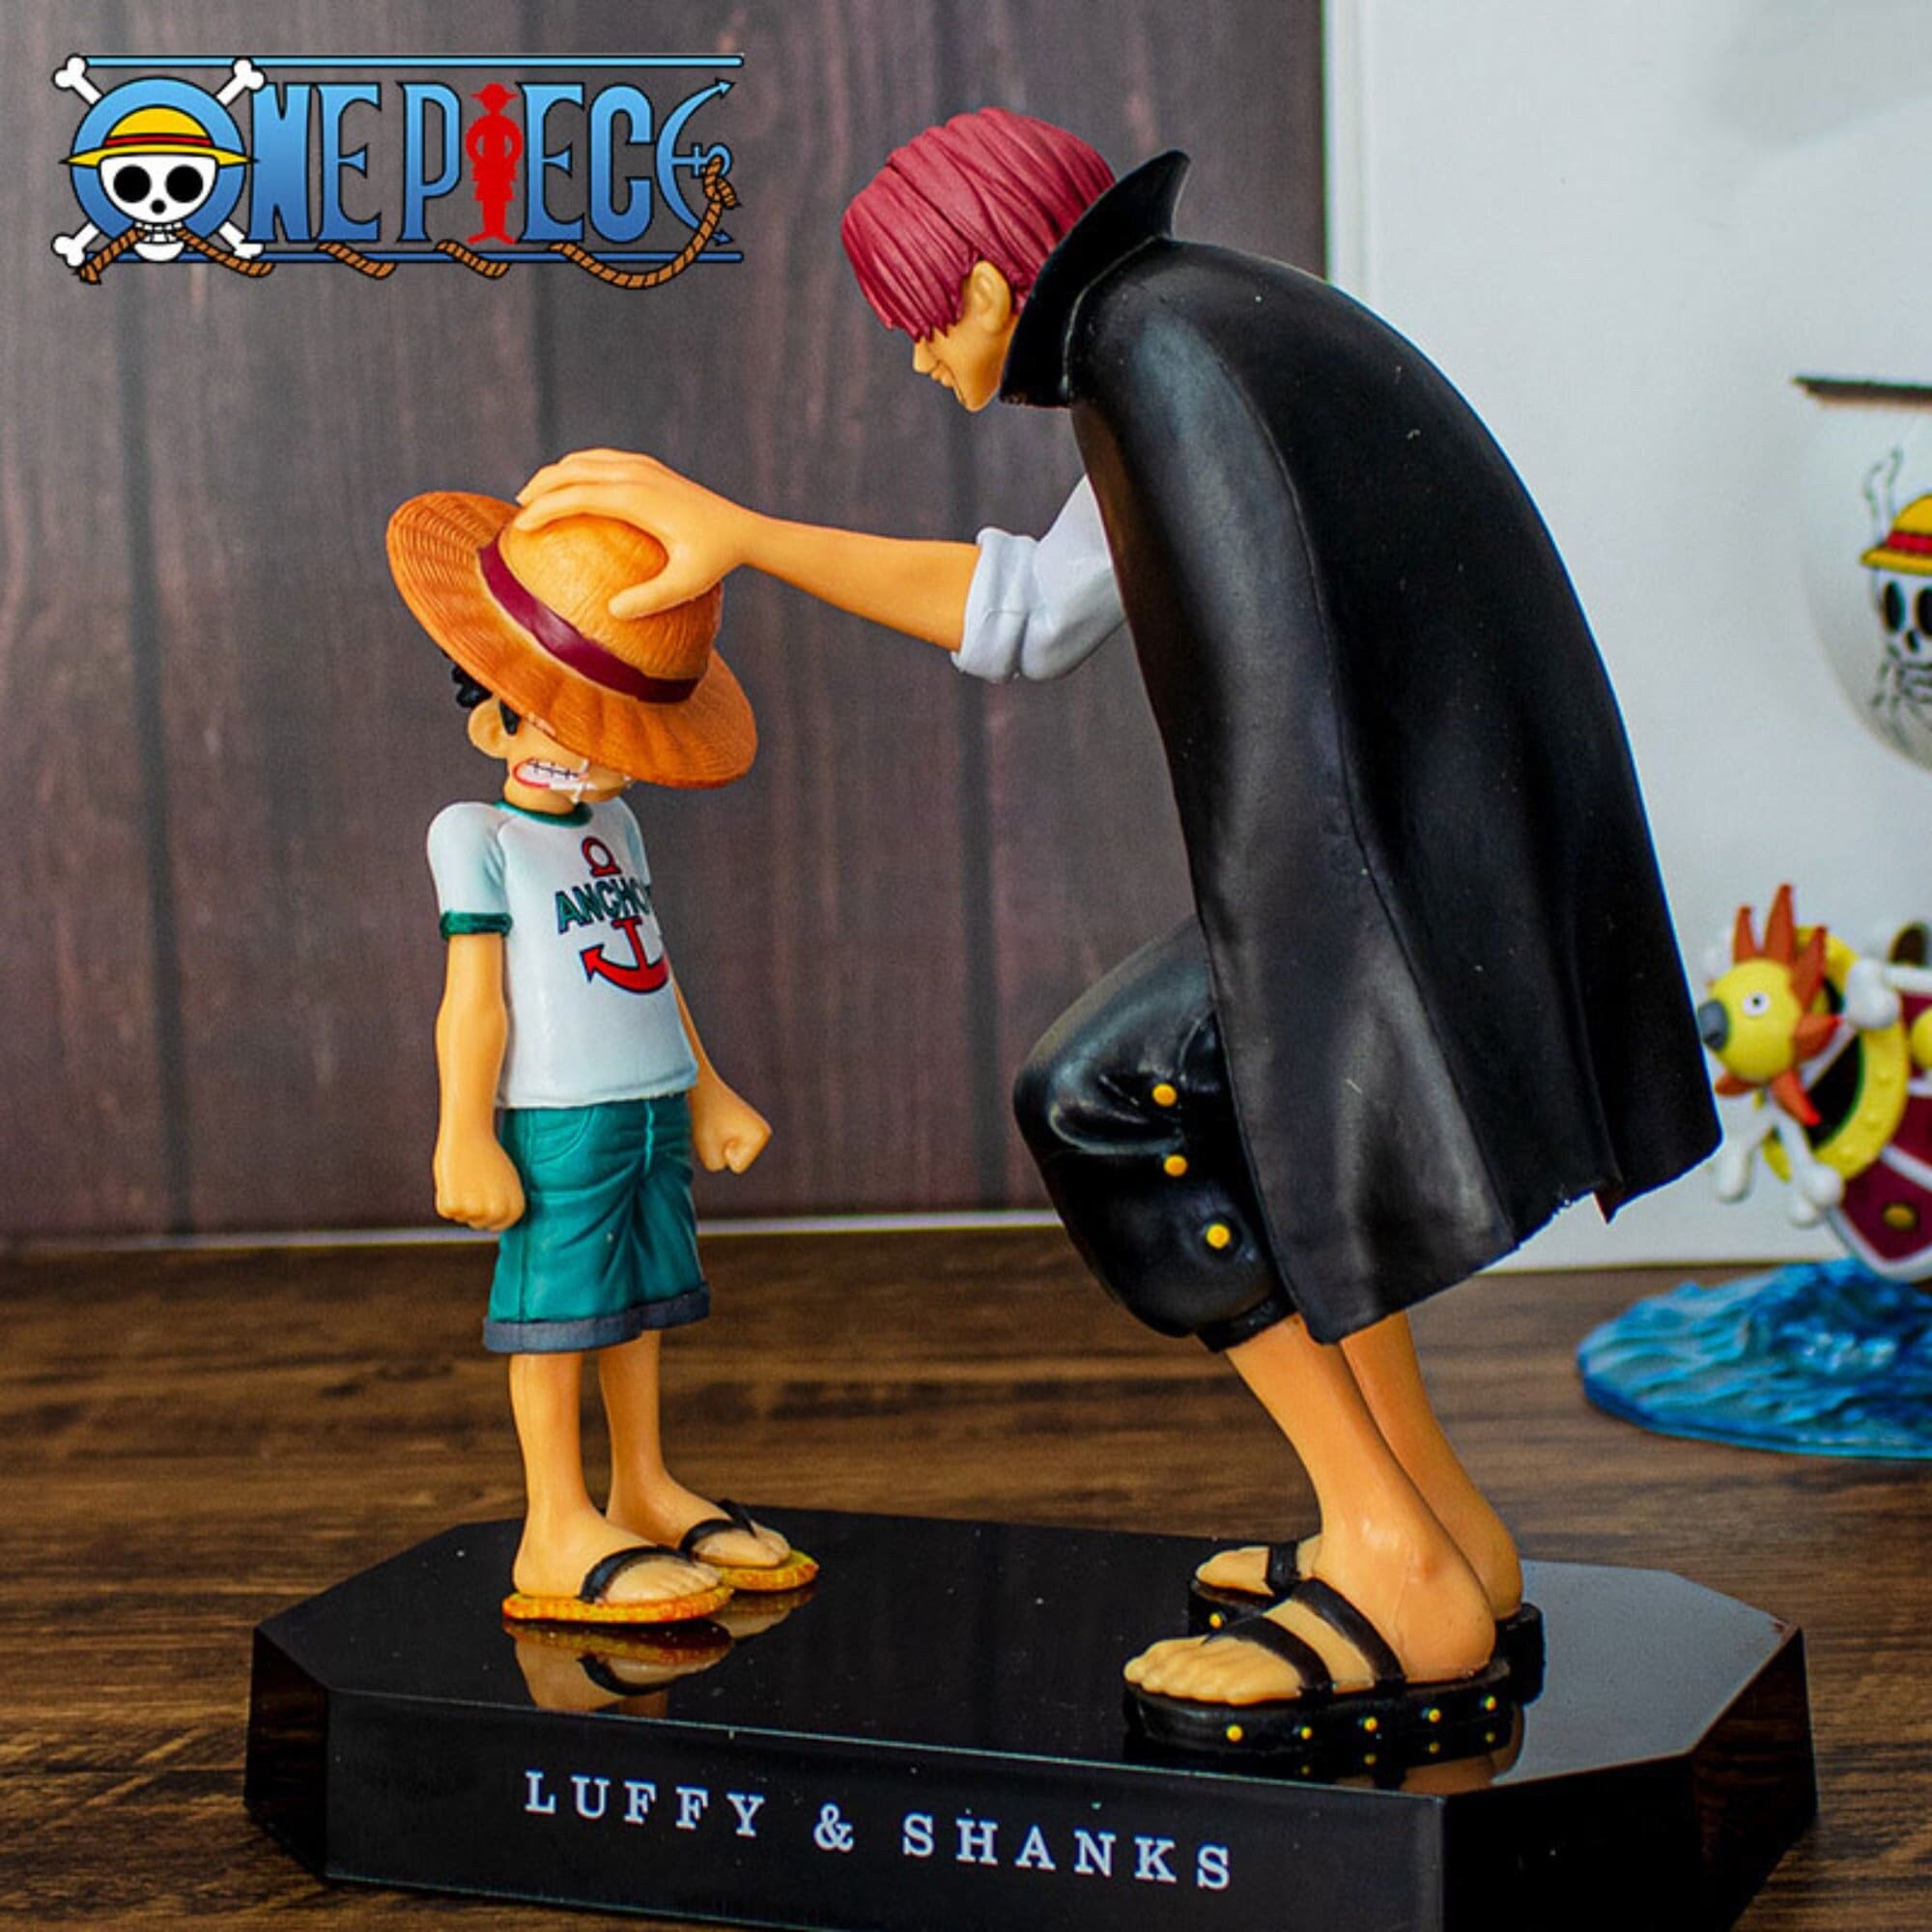 Luffy Gear 5 Figure, Joy Boy Figure, Anime Figures, Anime Toys